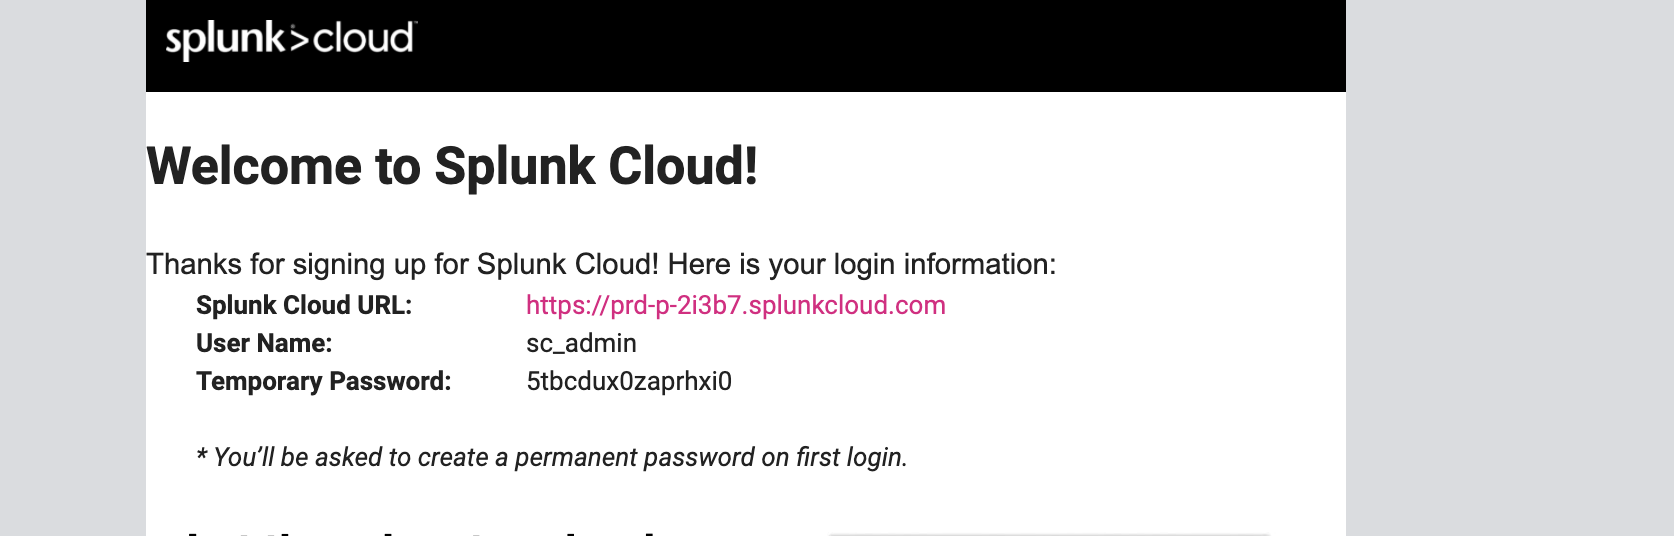 Splunk Cloud Email